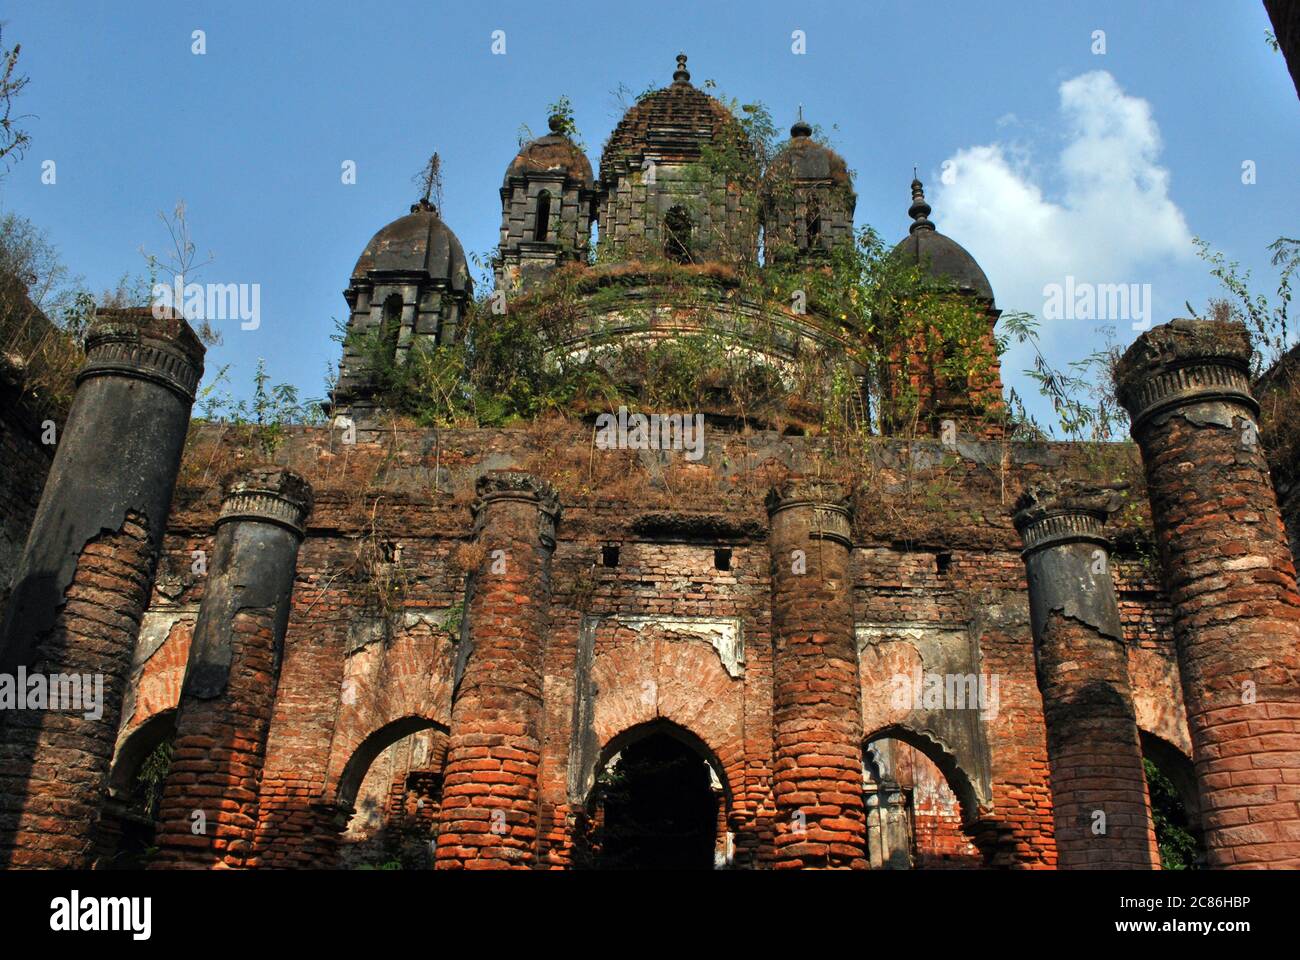 old temple of bawali raj bari or zamindar house Stock Photo